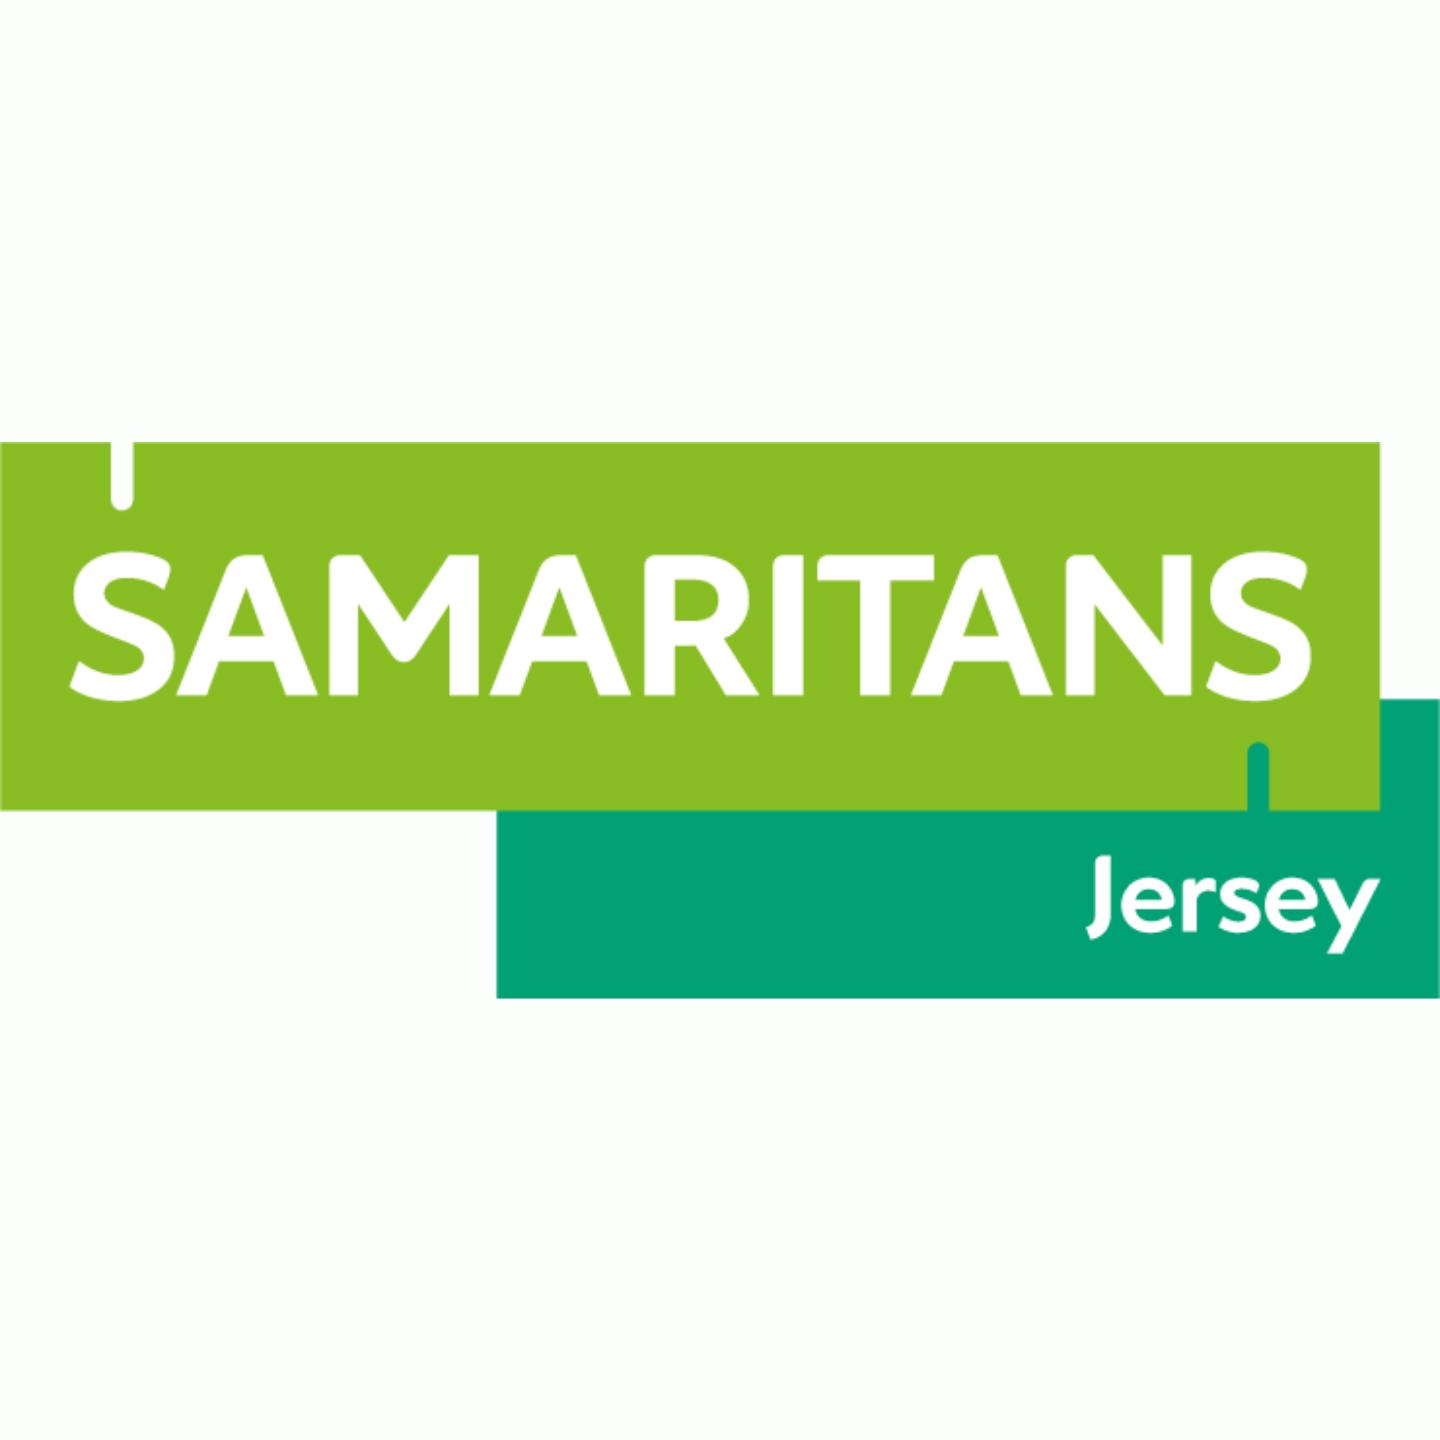 Samaritans Jersey